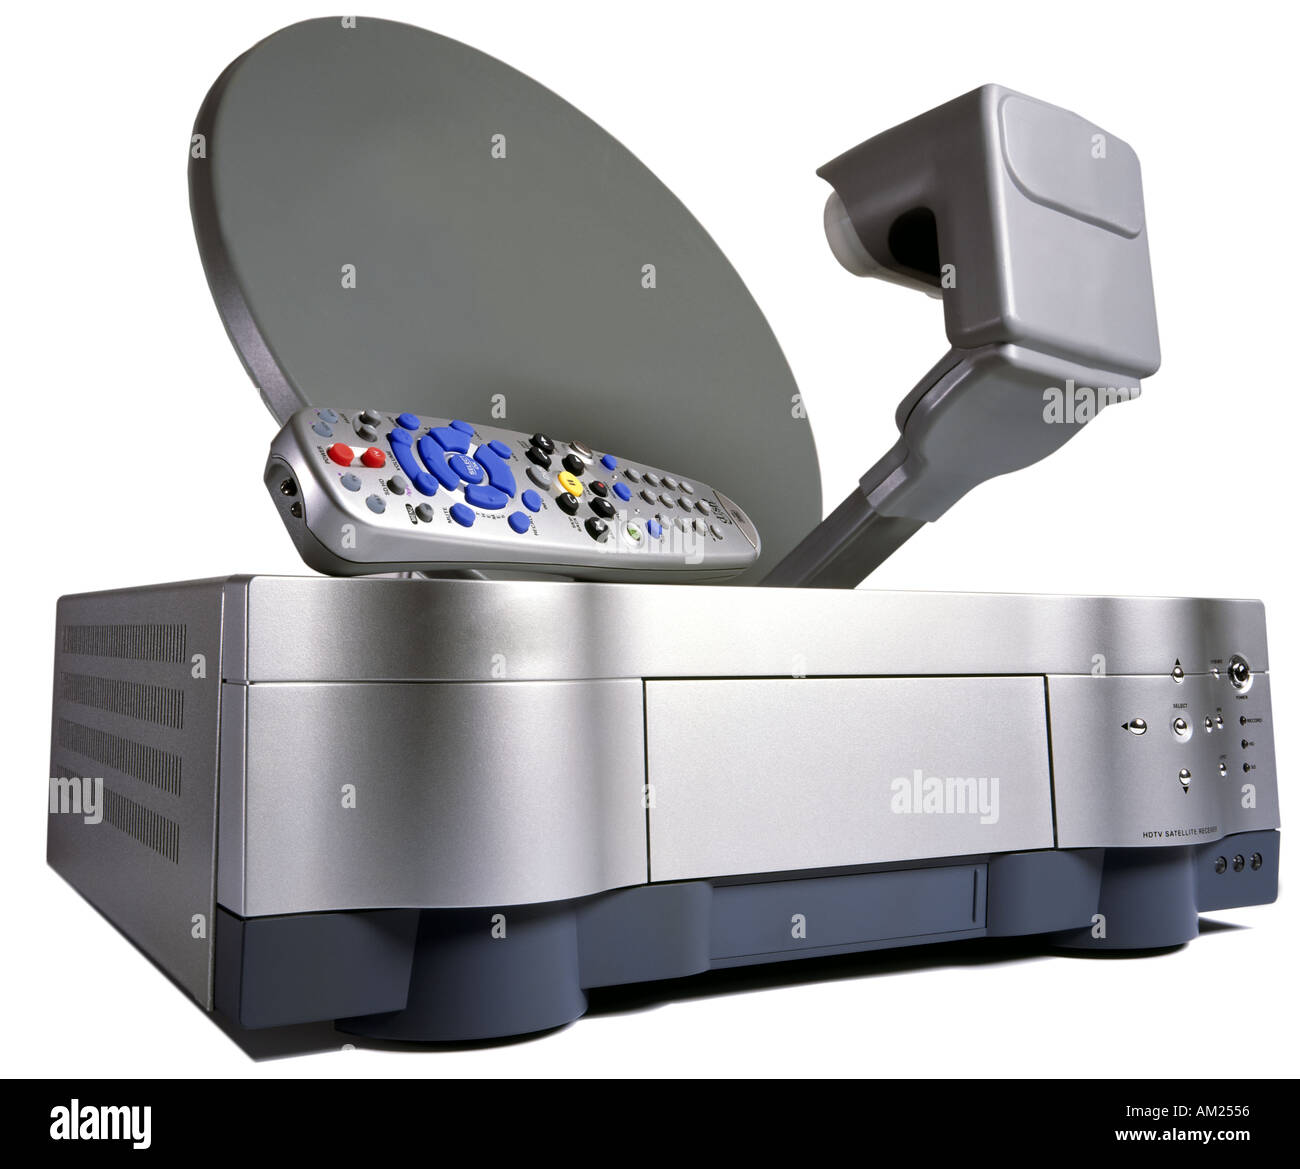 Satellite receiver dish remote control Stock Photo